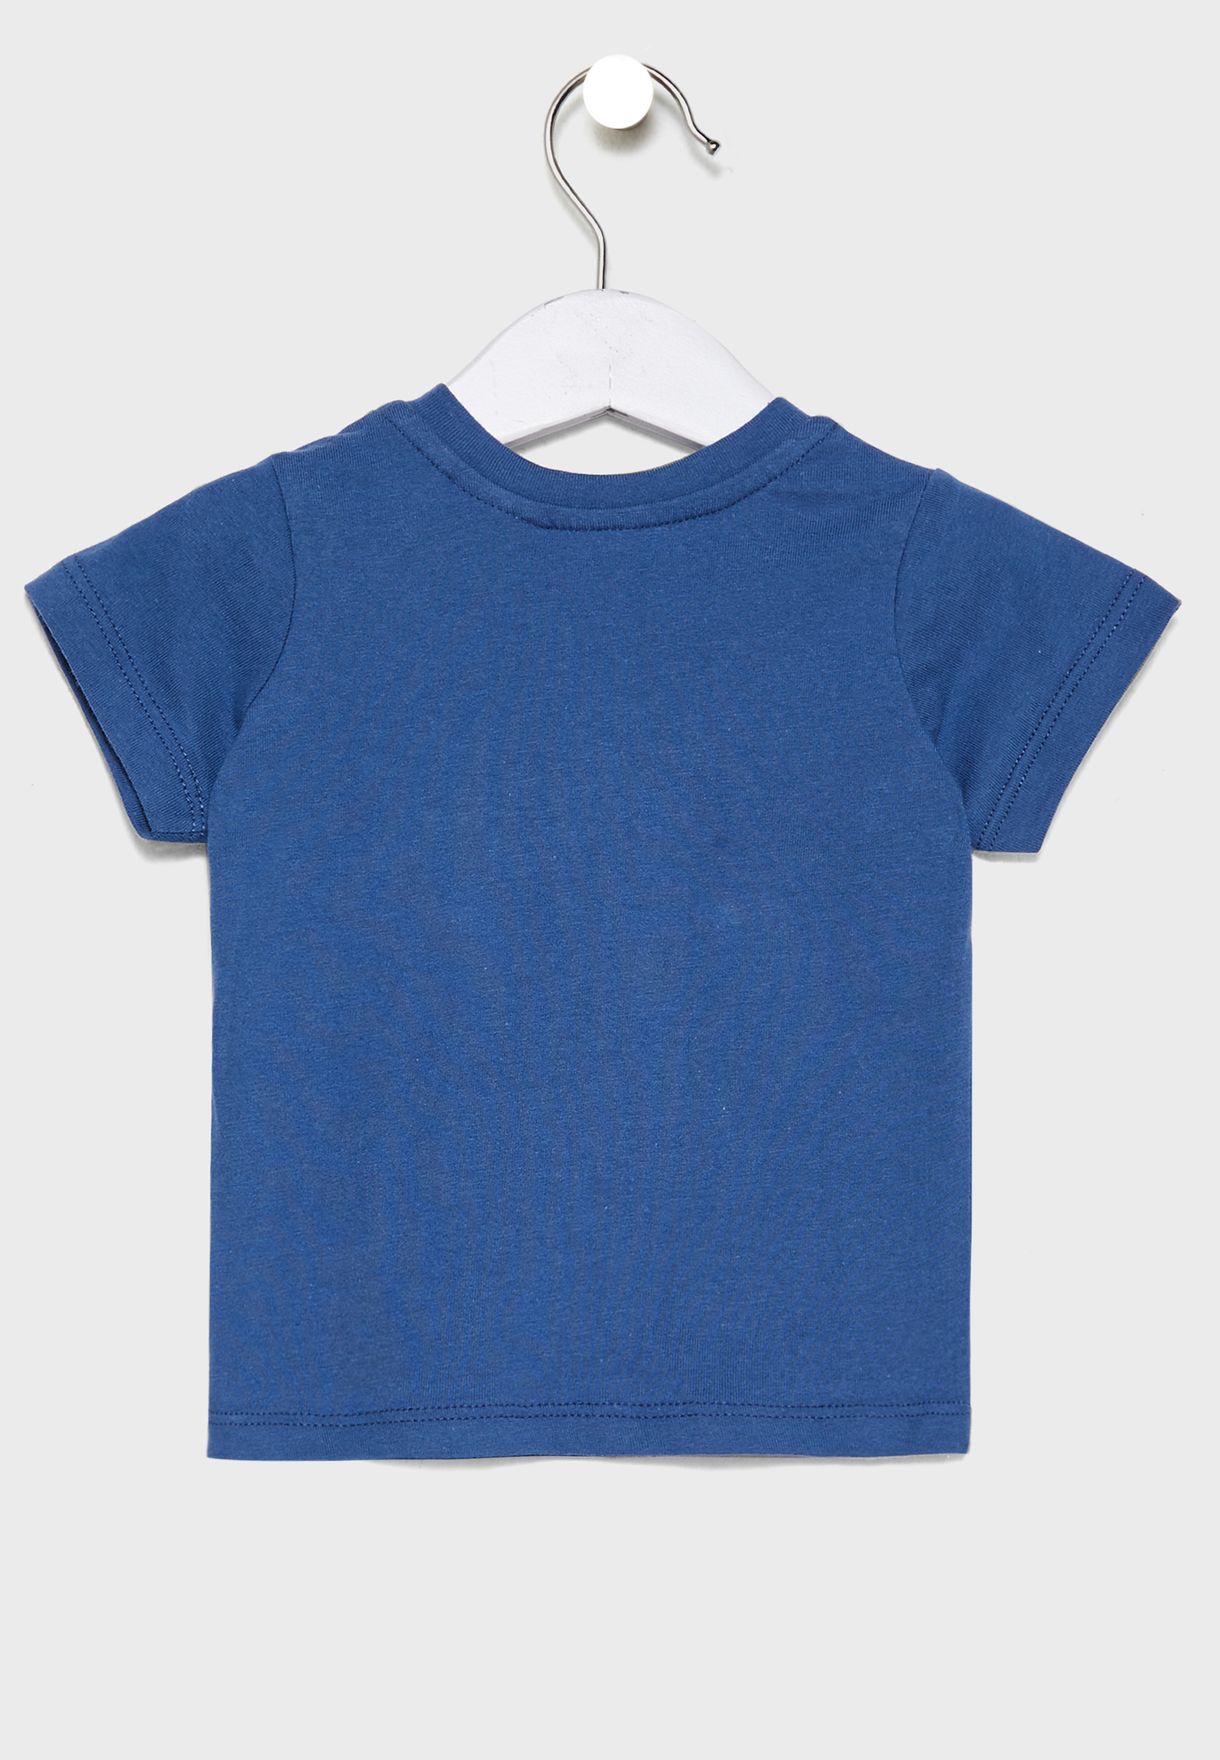 Infant Star Wars T-Shirt